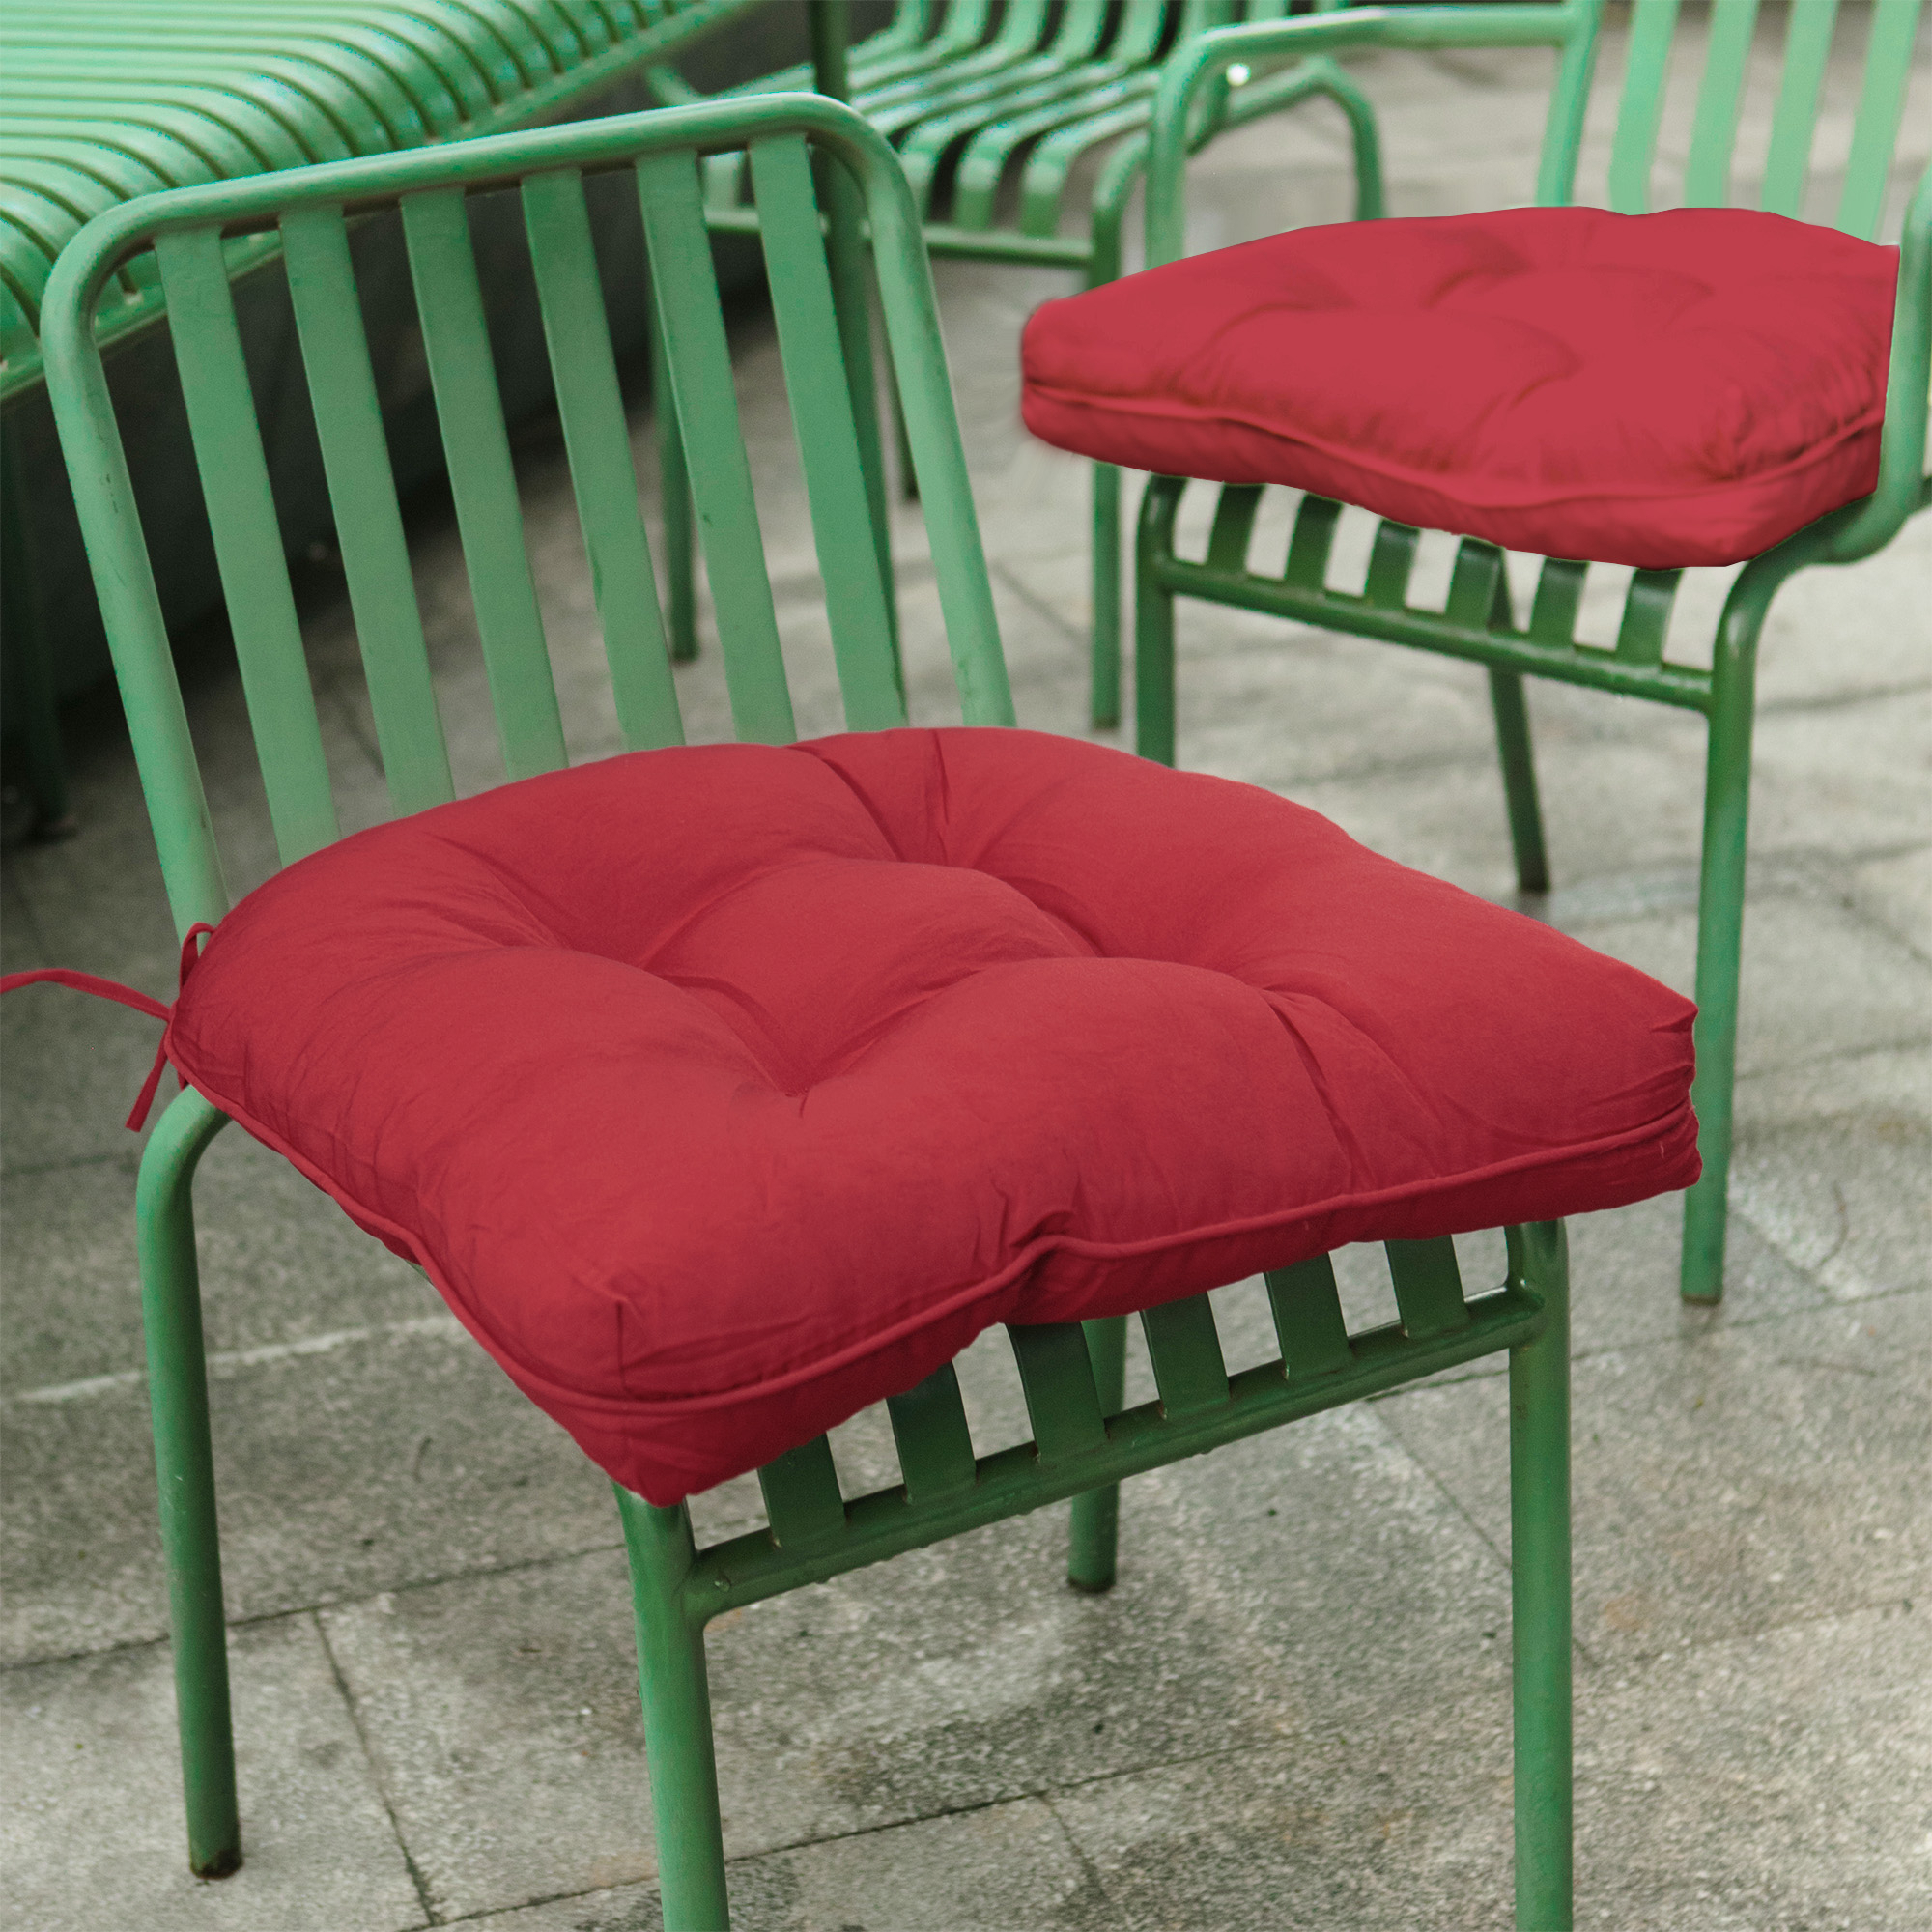 Outdoor Patio Seat Cushion Set Of 2-Waterproof Indoor Outdoor Cushion - Wine